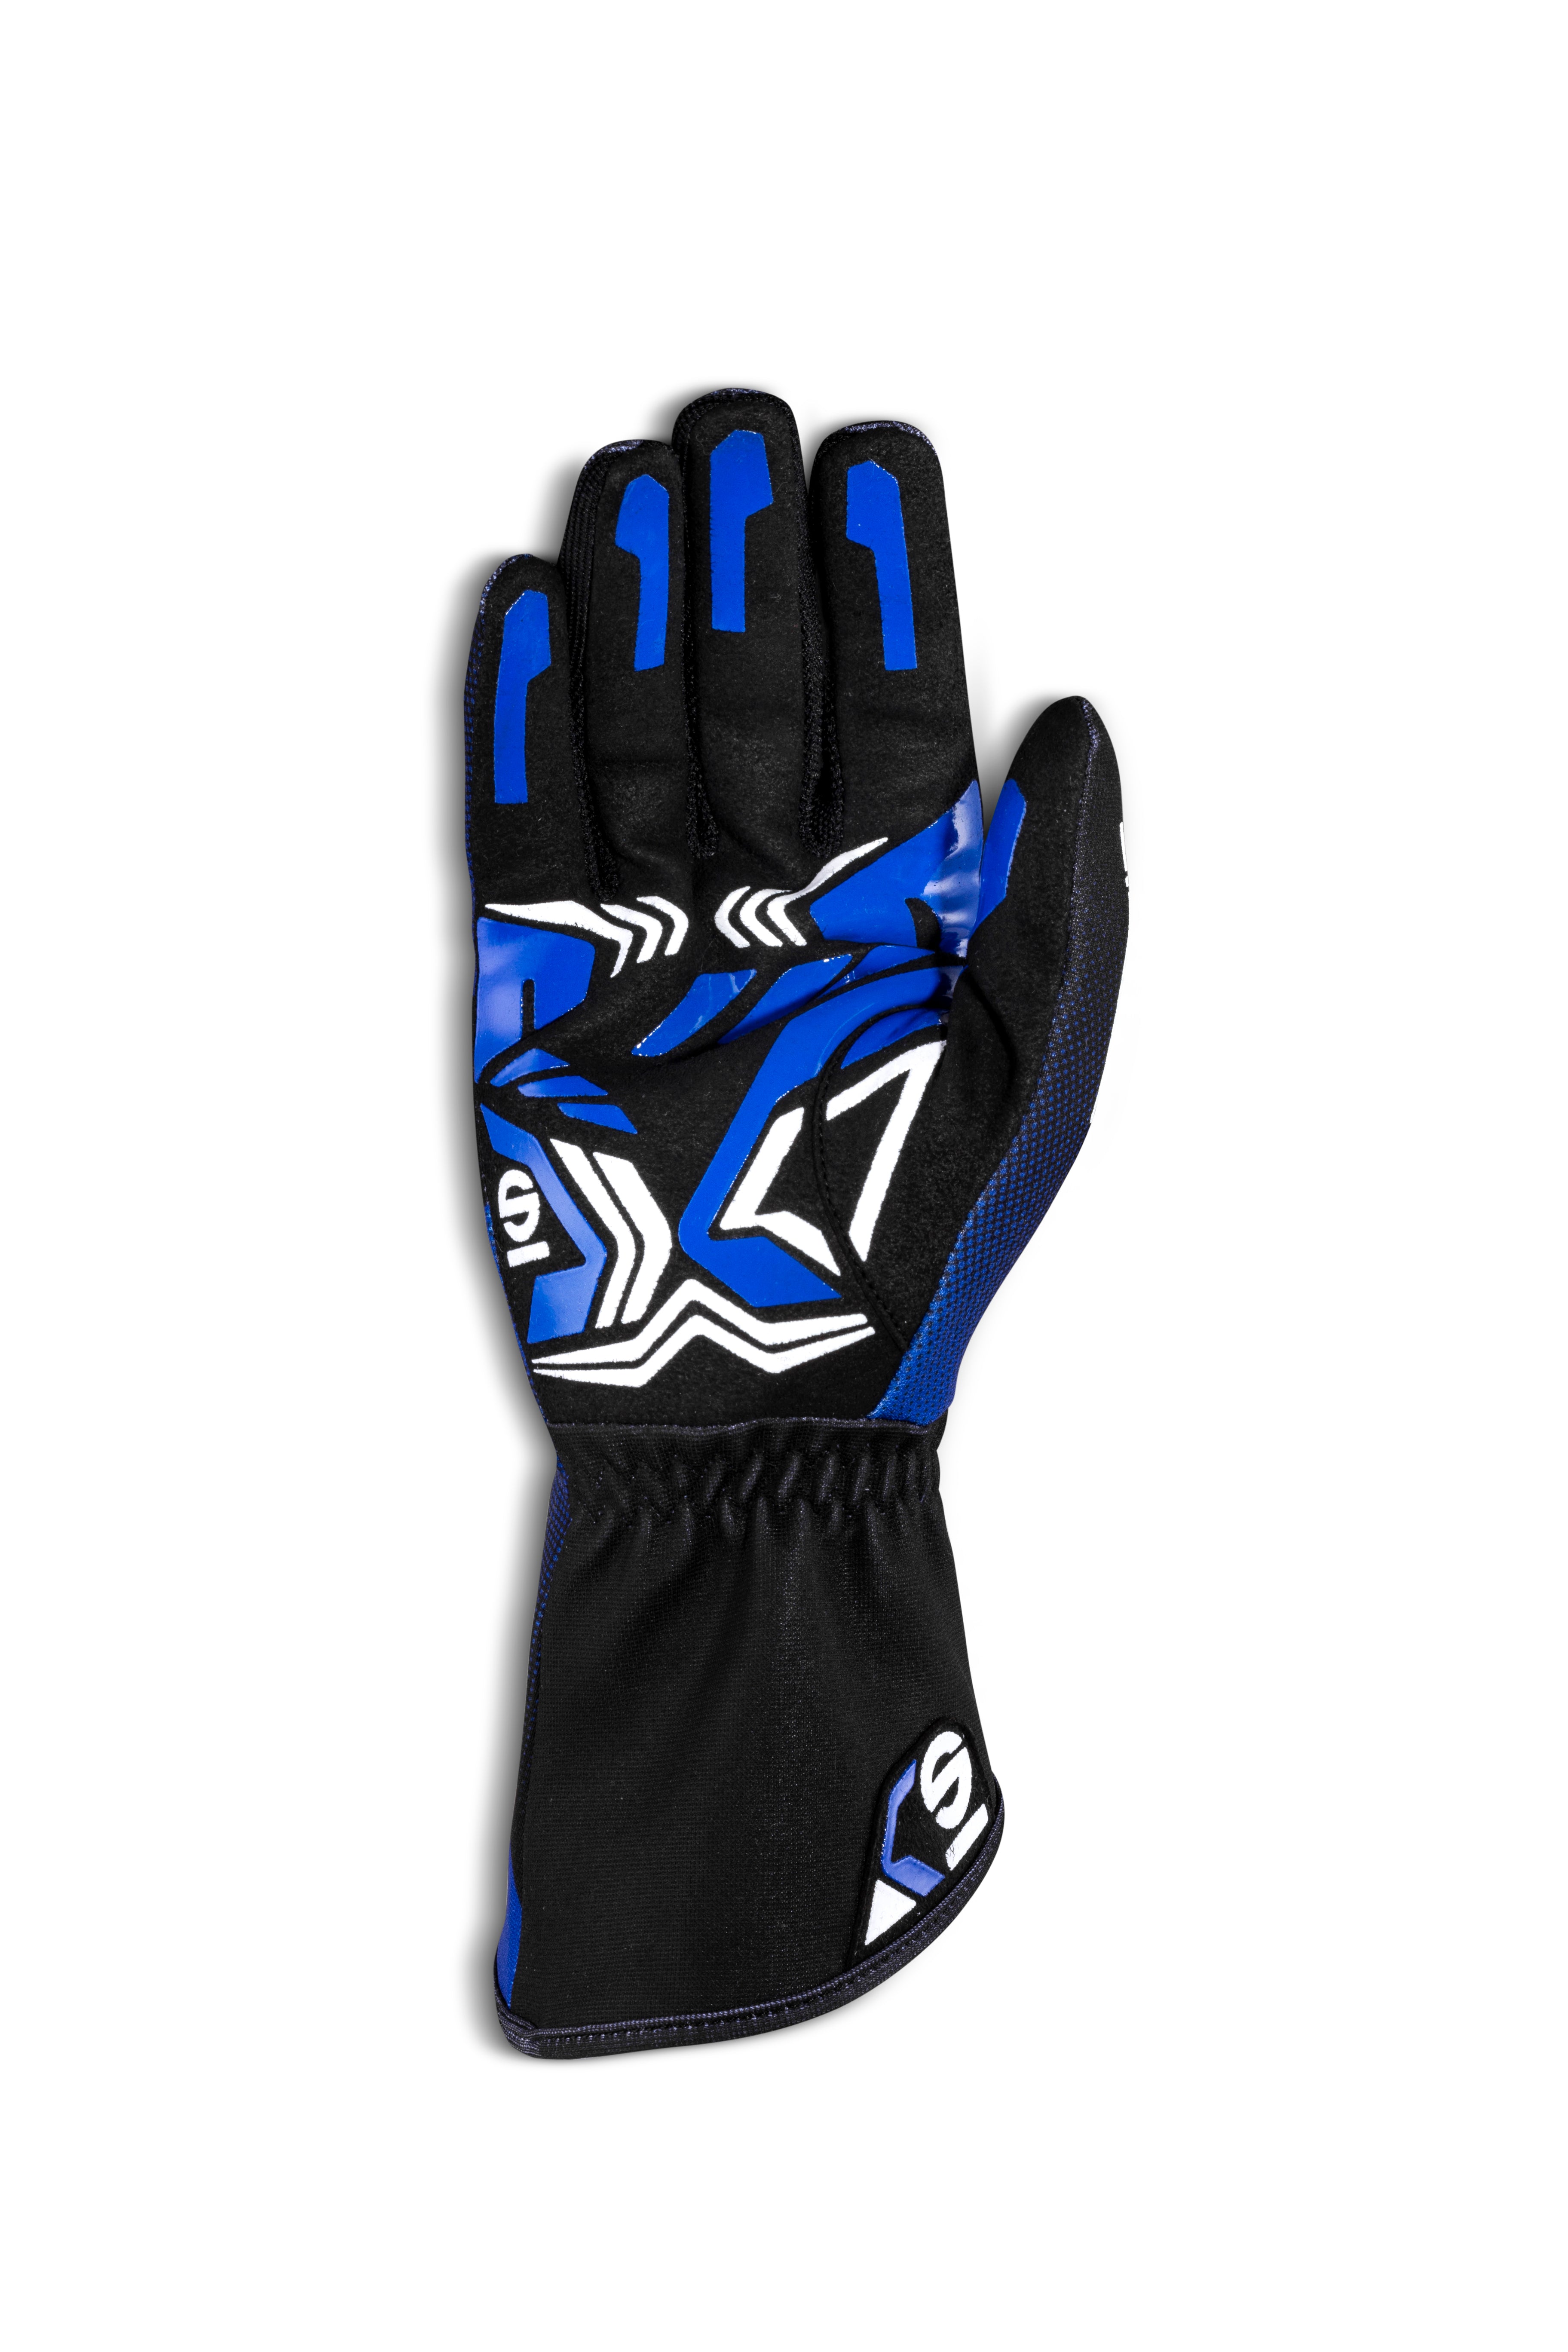 SPARCO 00255609BXNR Kart gloves RUSH, blue/black, size 9 Photo-1 